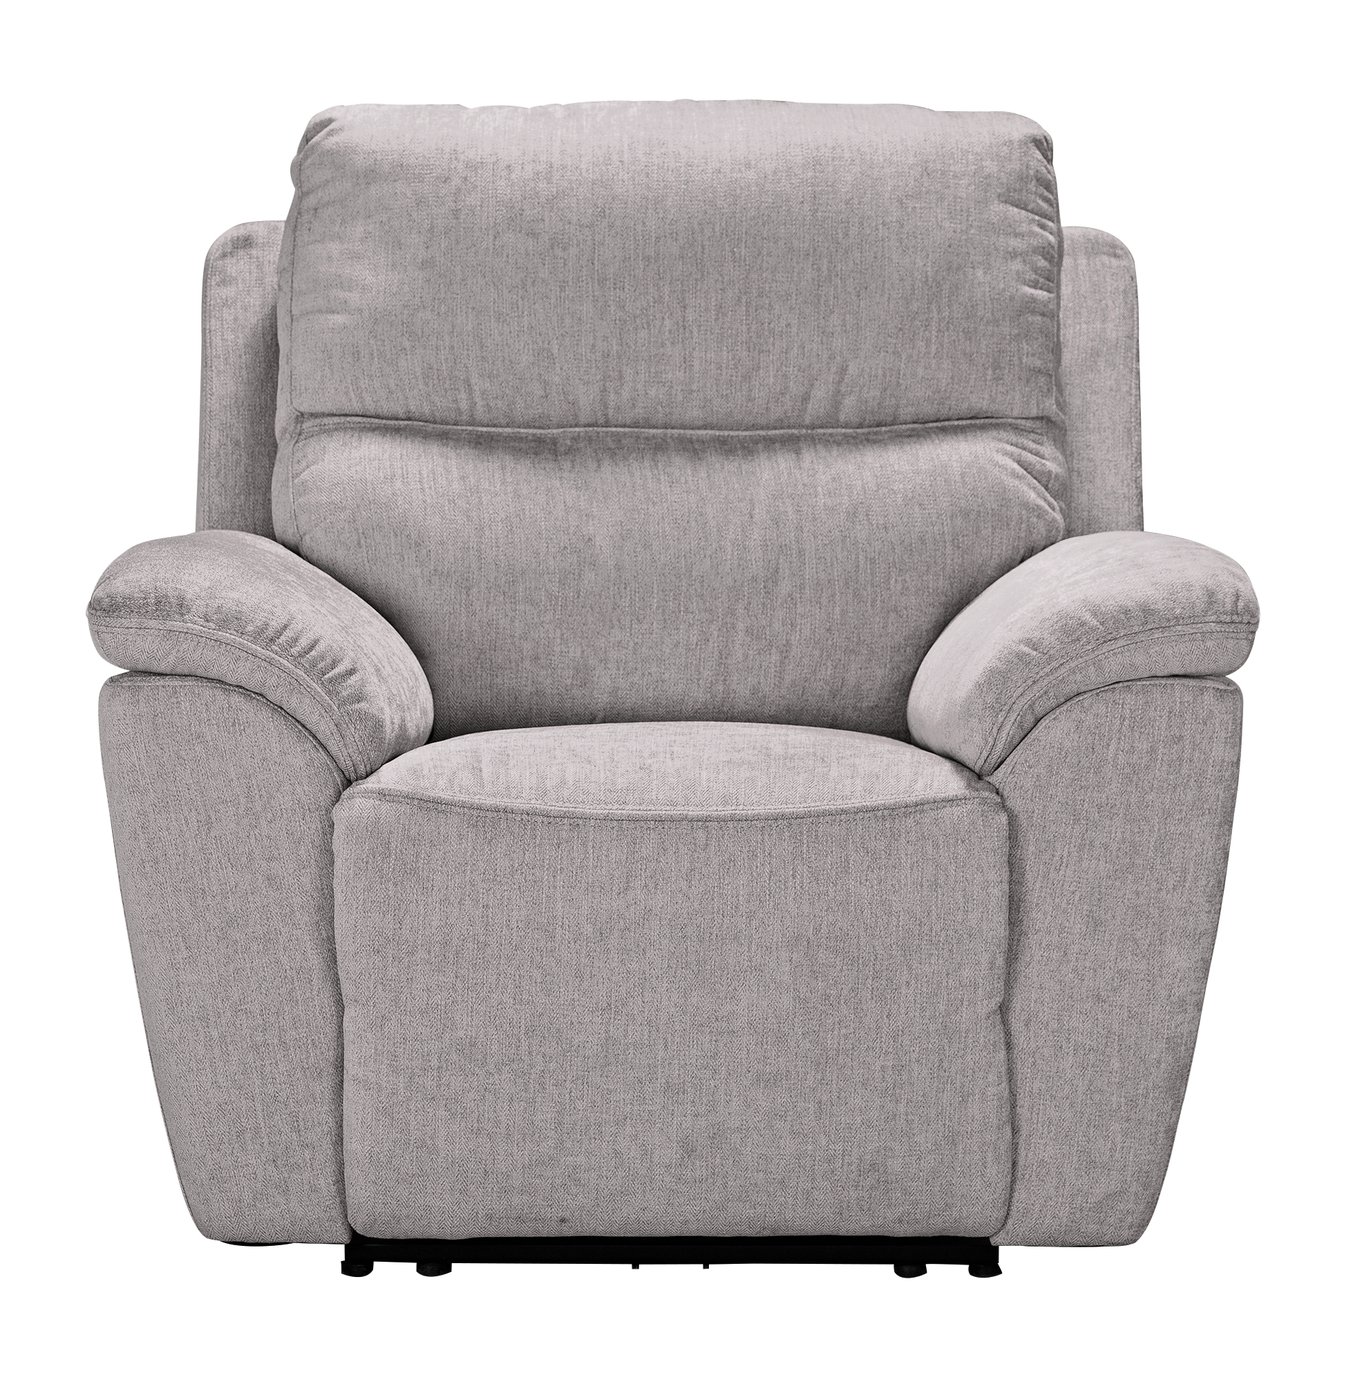 Argos Home Sandy Fabric Manual Recliner Chair Reviews